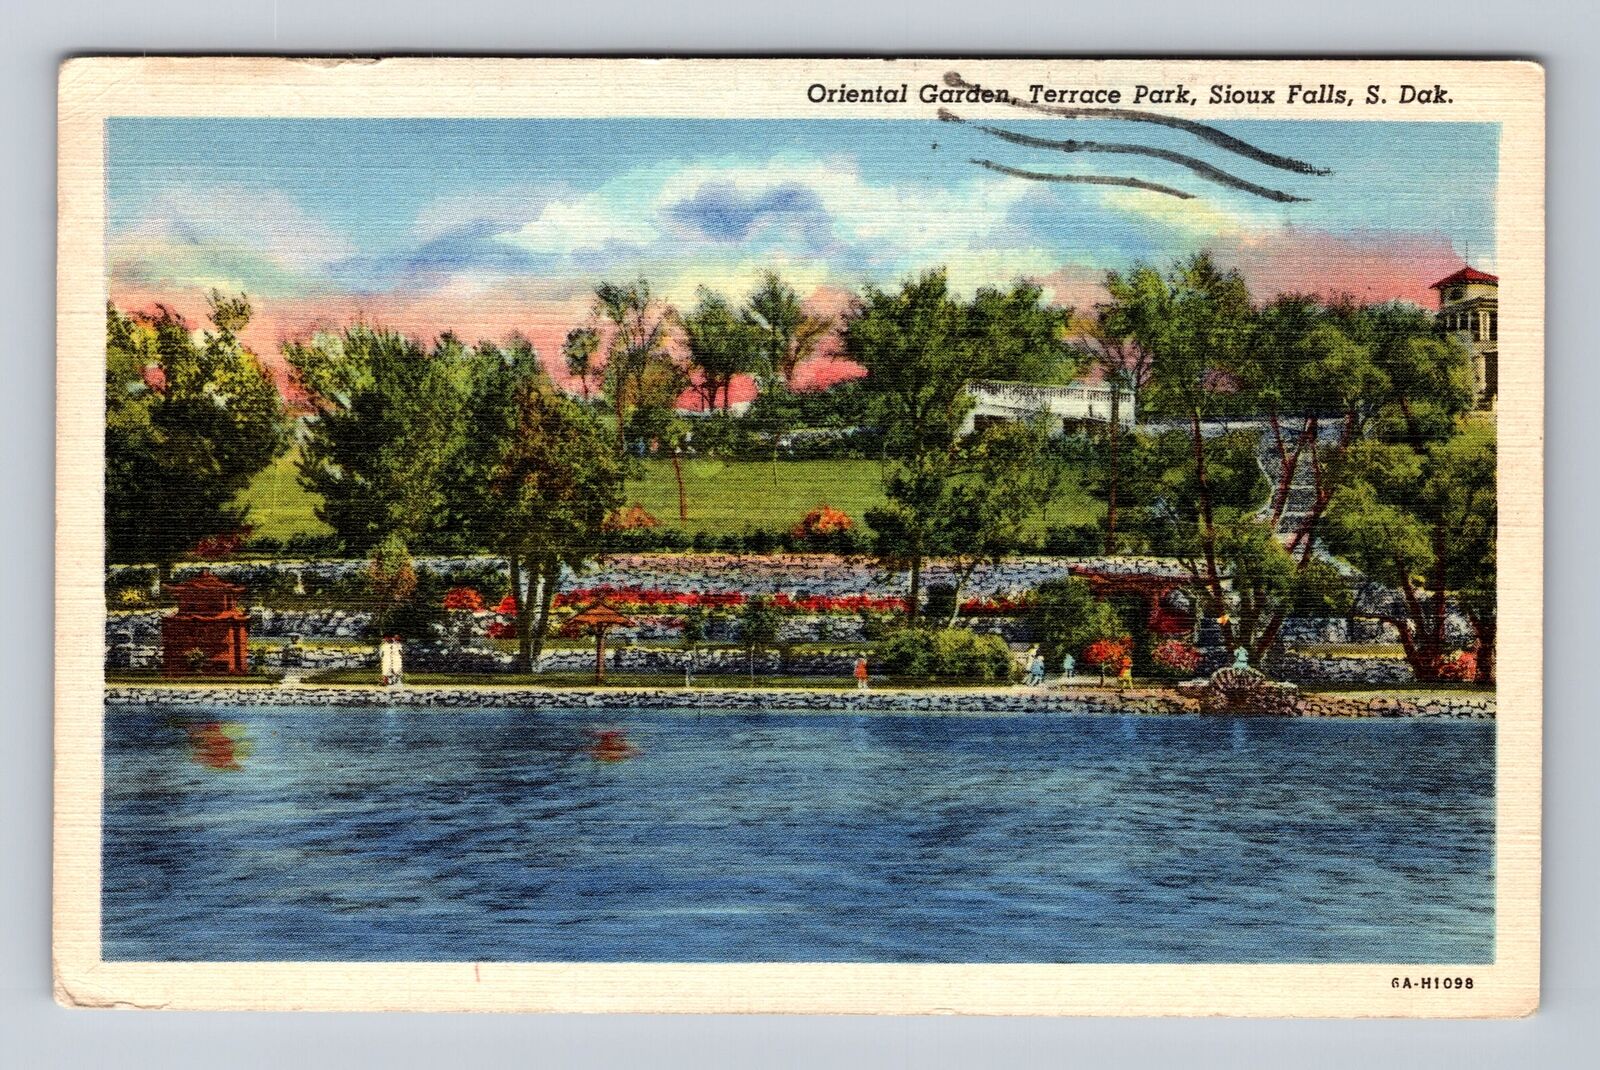 Sioux Falls SD-South Dakota, Terrace Park Oriental Garden Vintage Postcard